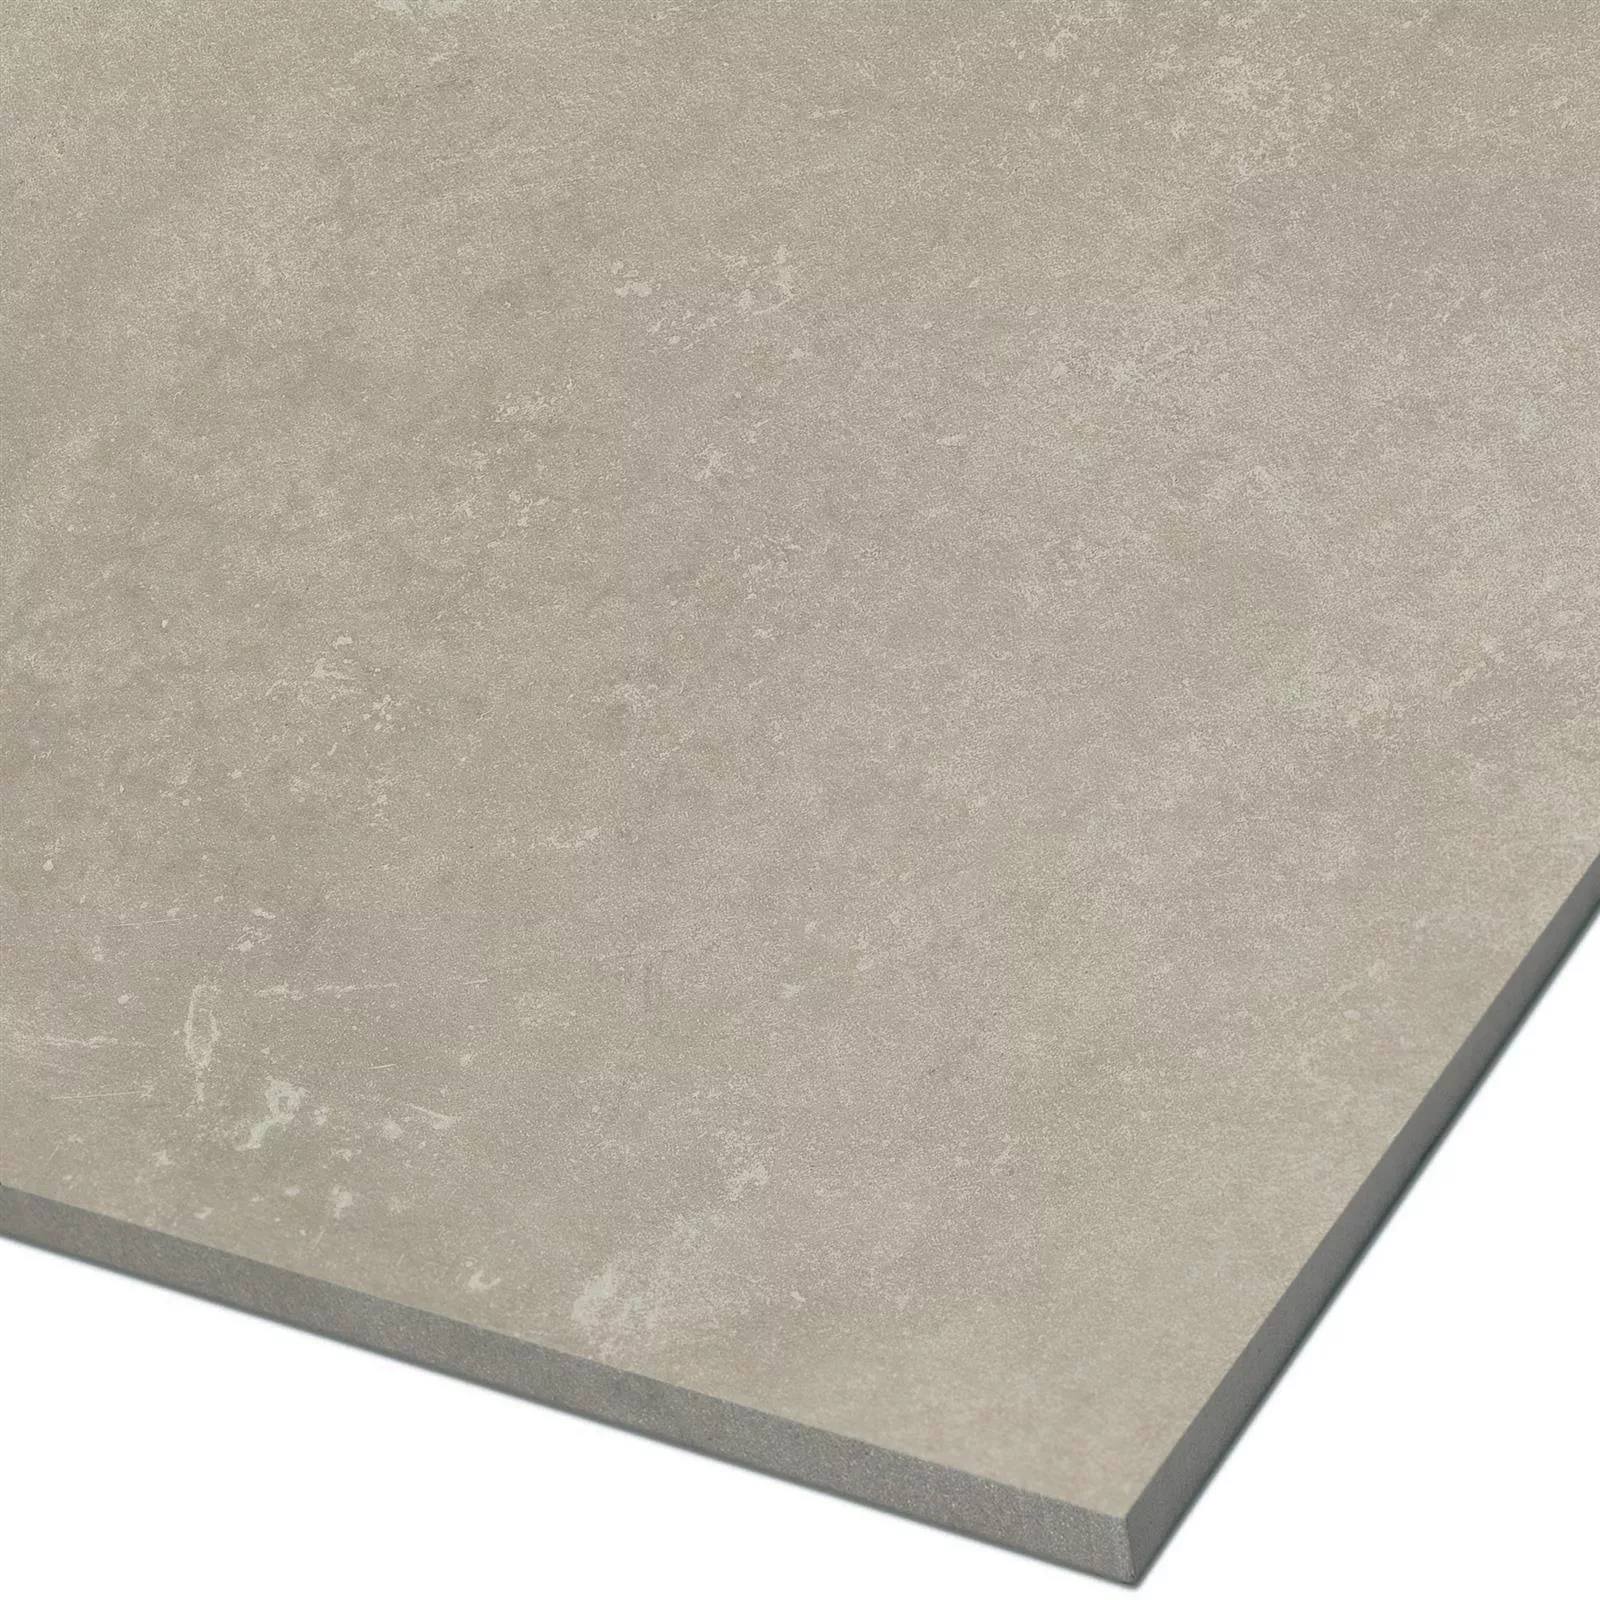 Podlahové Dlaždice Cementový Vzhled Nepal Slim Béžová 60x60cm